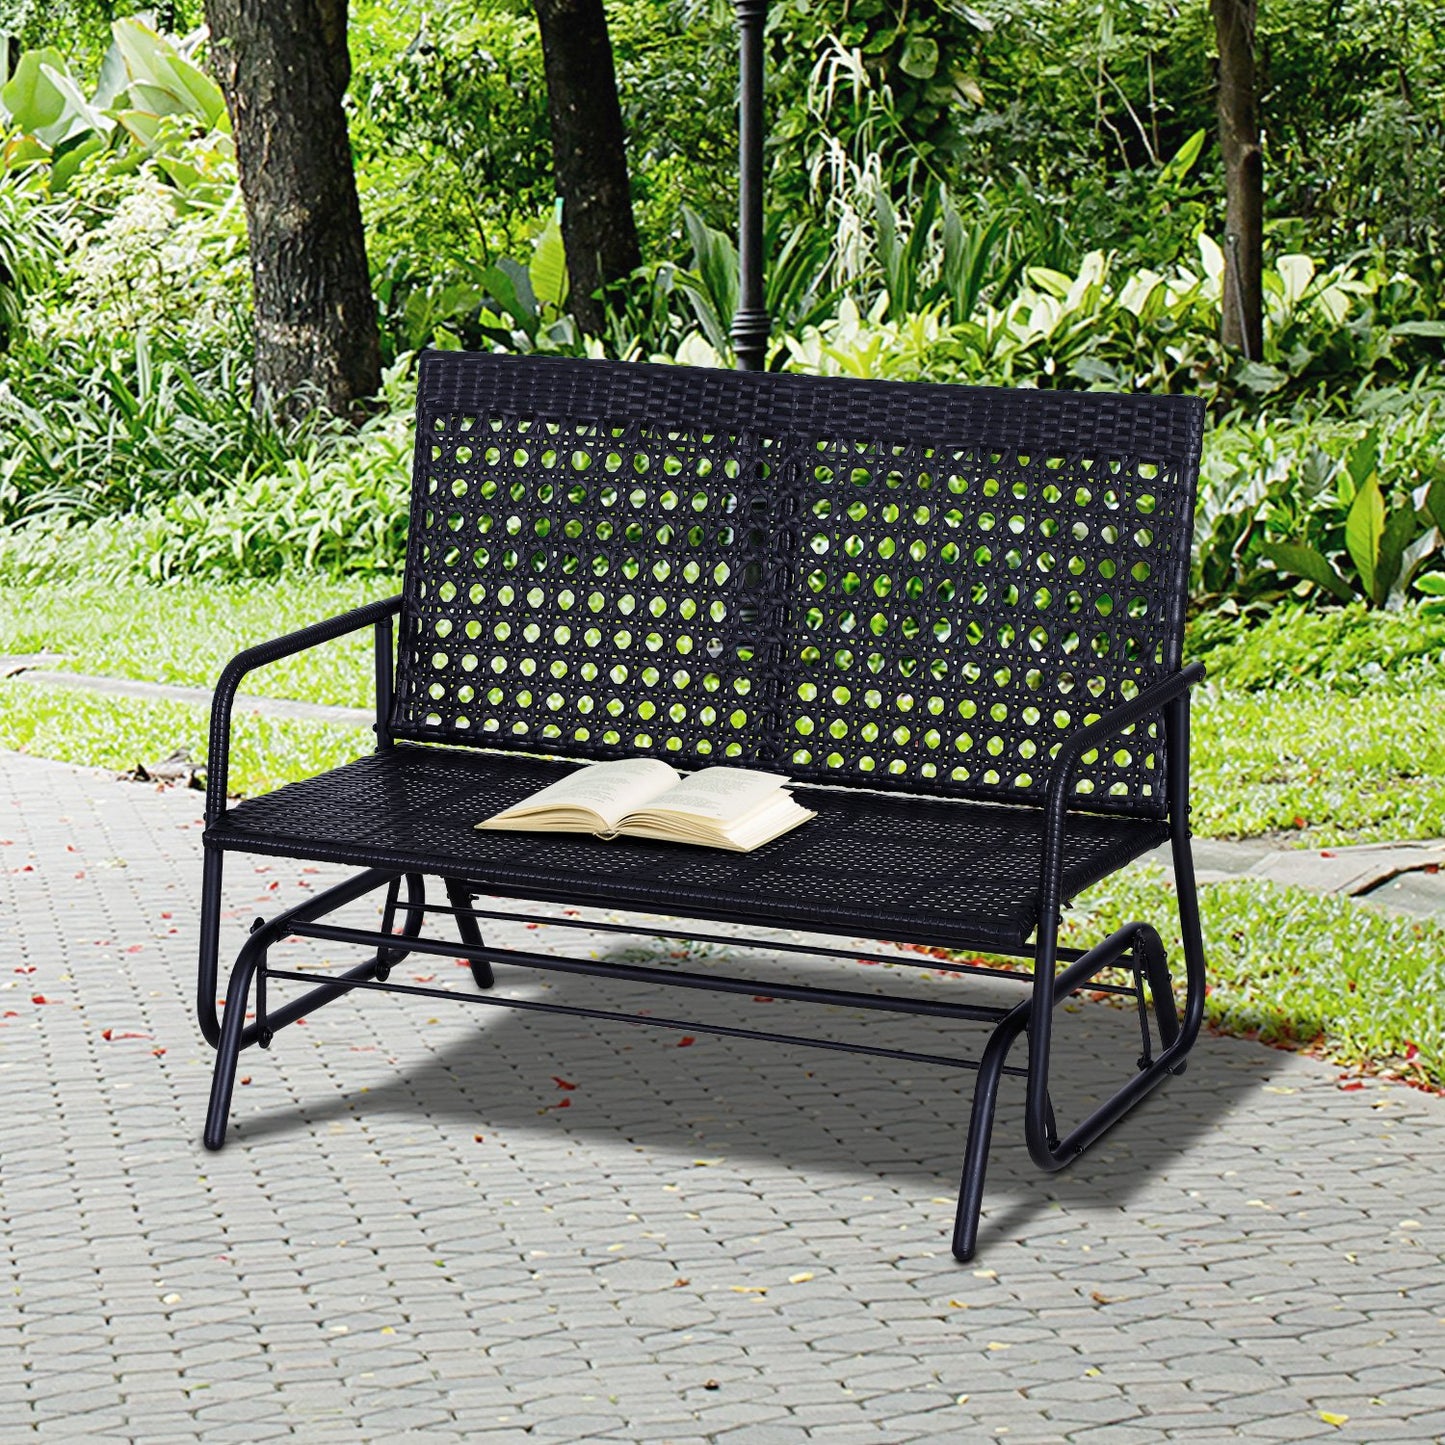 Nancy's Carson Swing Bench - Garden Swing - Garden Bench - Polyrattan - 2-Seater - Black - 120 x 76 x 90 cm